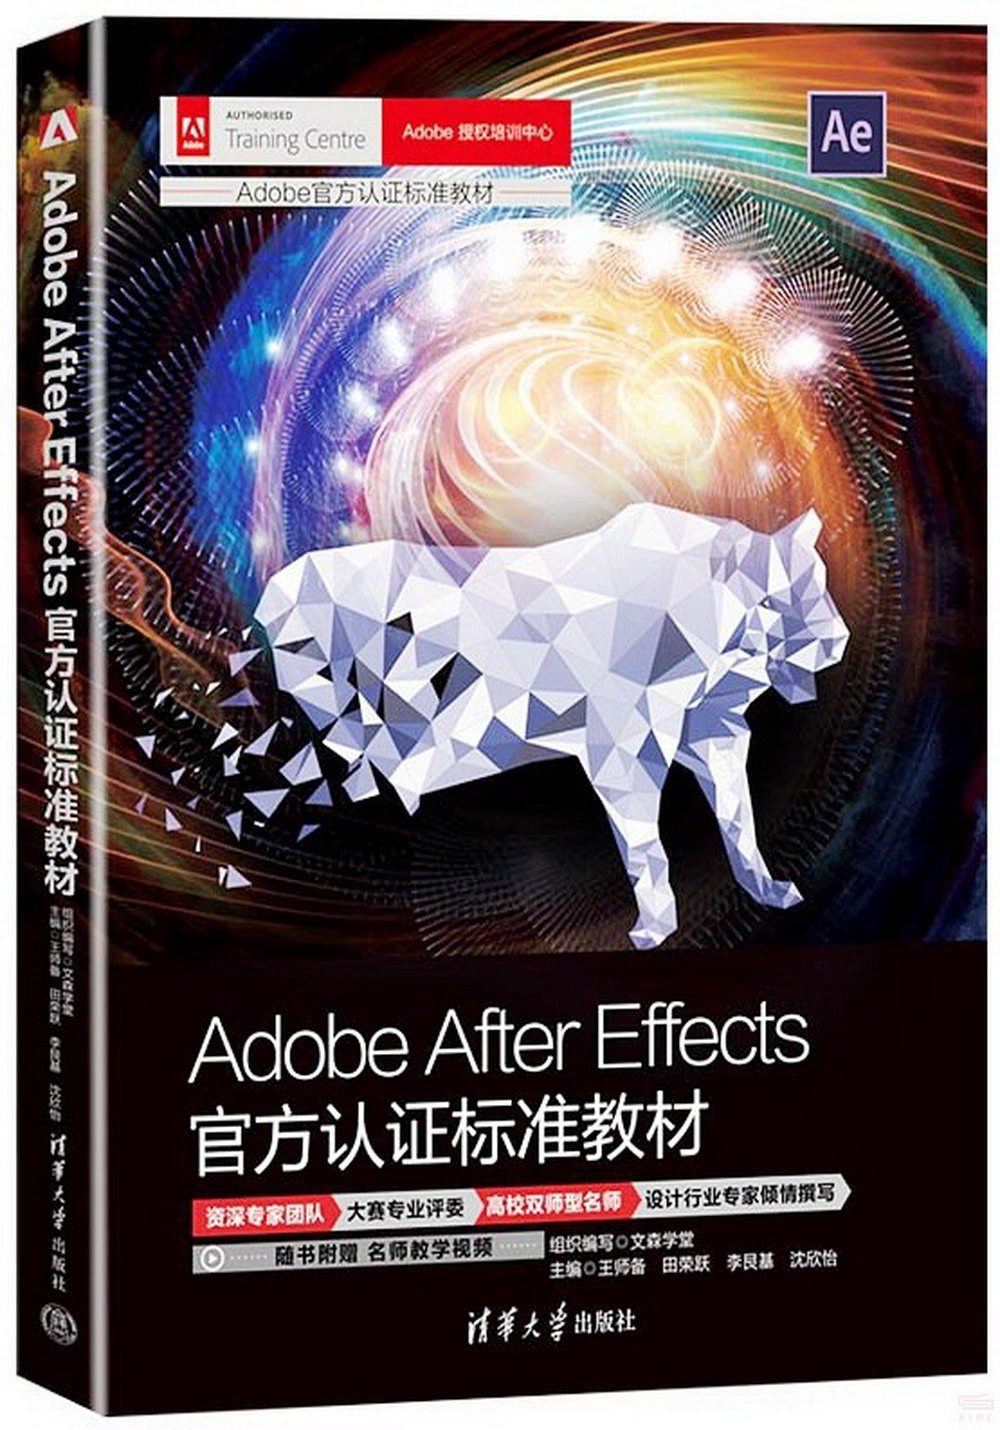 Adobe After Effects官方認證標準教材